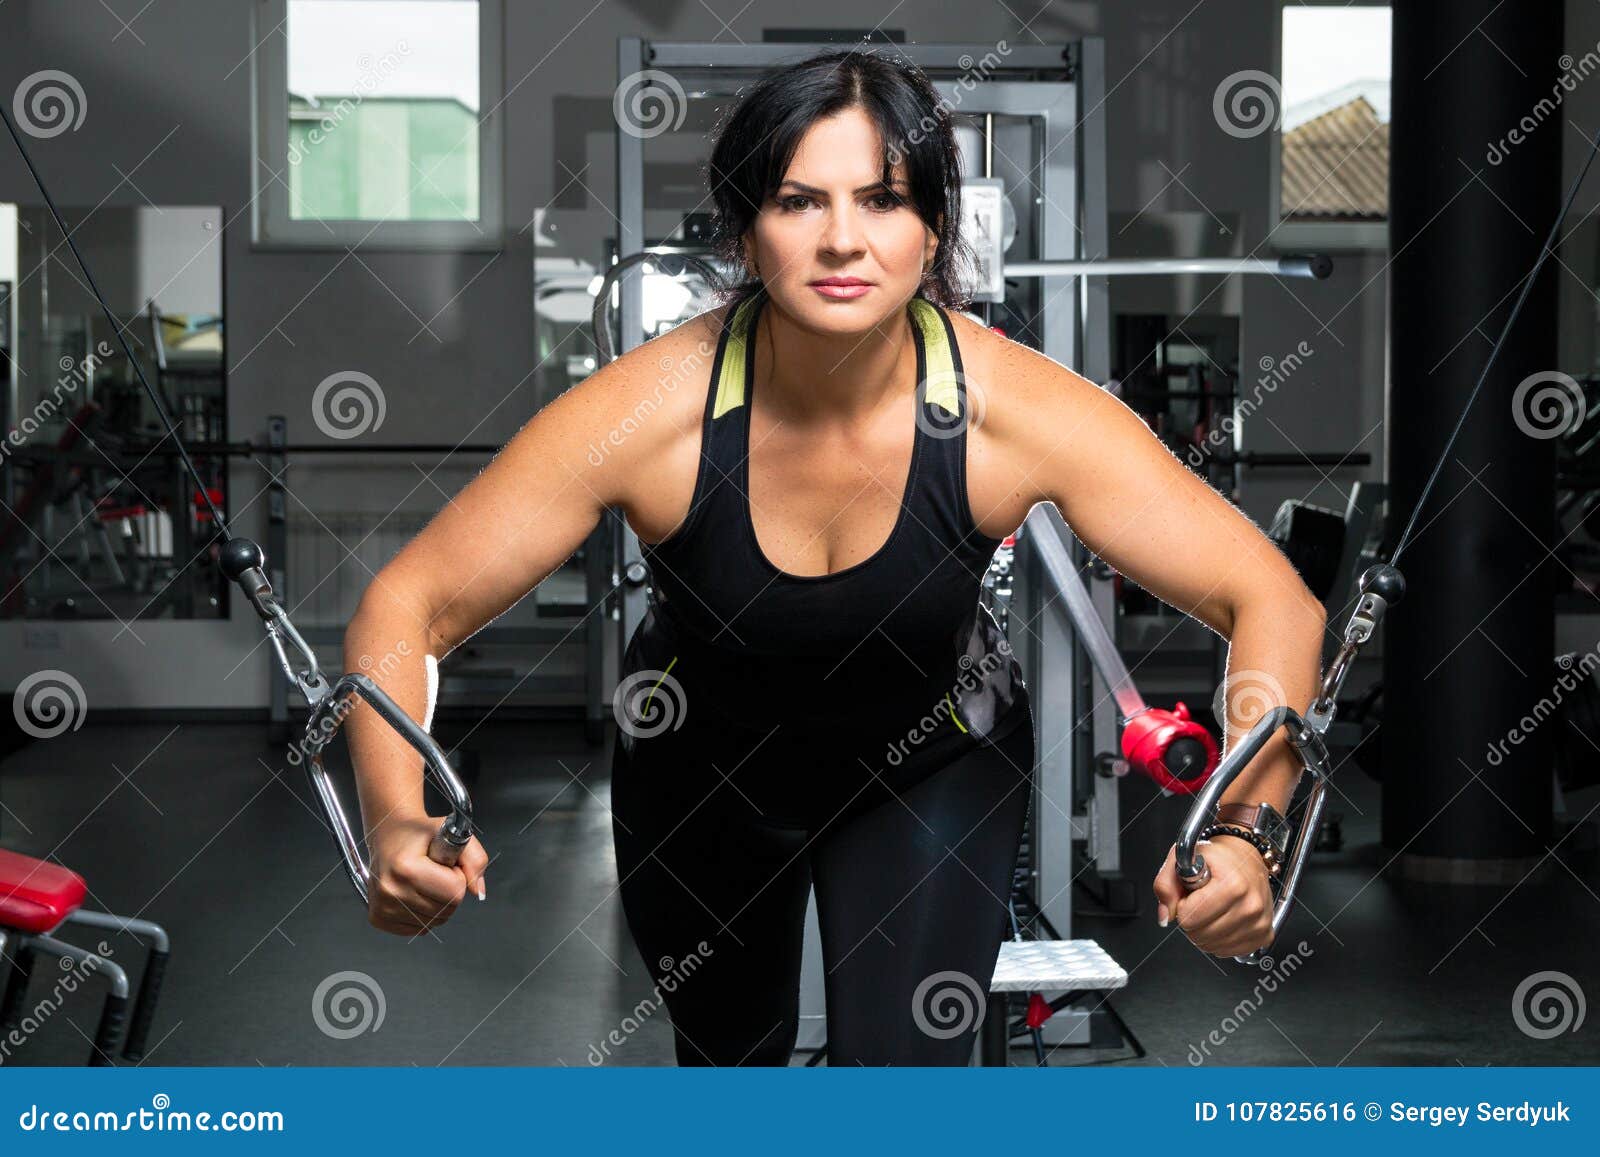 https://thumbs.dreamstime.com/z/woman-plus-size-gym-doing-exercises-training-apparatus-woman-plus-size-gym-doing-exercises-training-apparatus-107825616.jpg